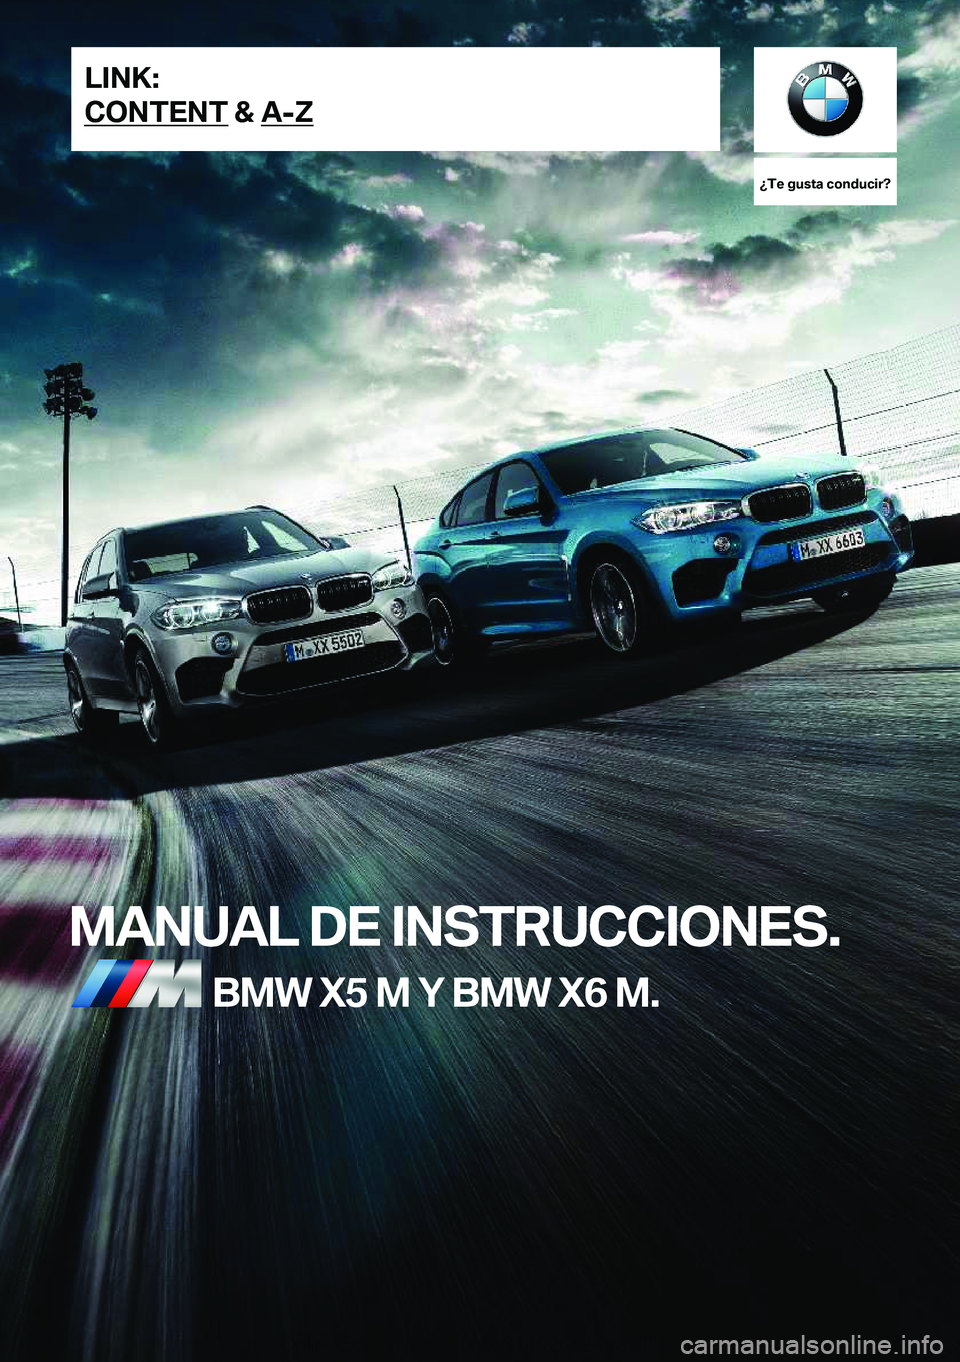 BMW X5 M 2018  Manuales de Empleo (in Spanish) ��T�e��g�u�s�t�a��c�o�n�d�u�c�i�r� 
�M�A�N�U�A�L��D�E��I�N�S�T�R�U�C�C�I�O�N�E�S�.�B�M�W��X�5��M��Y��B�M�W��X�6��M�.�L�I�N�K�:
�C�O�N�T�E�N�T��&��A�-�Z�O�n�l�i�n�e� �E�d�i�t�i�o�n� �f�o�r